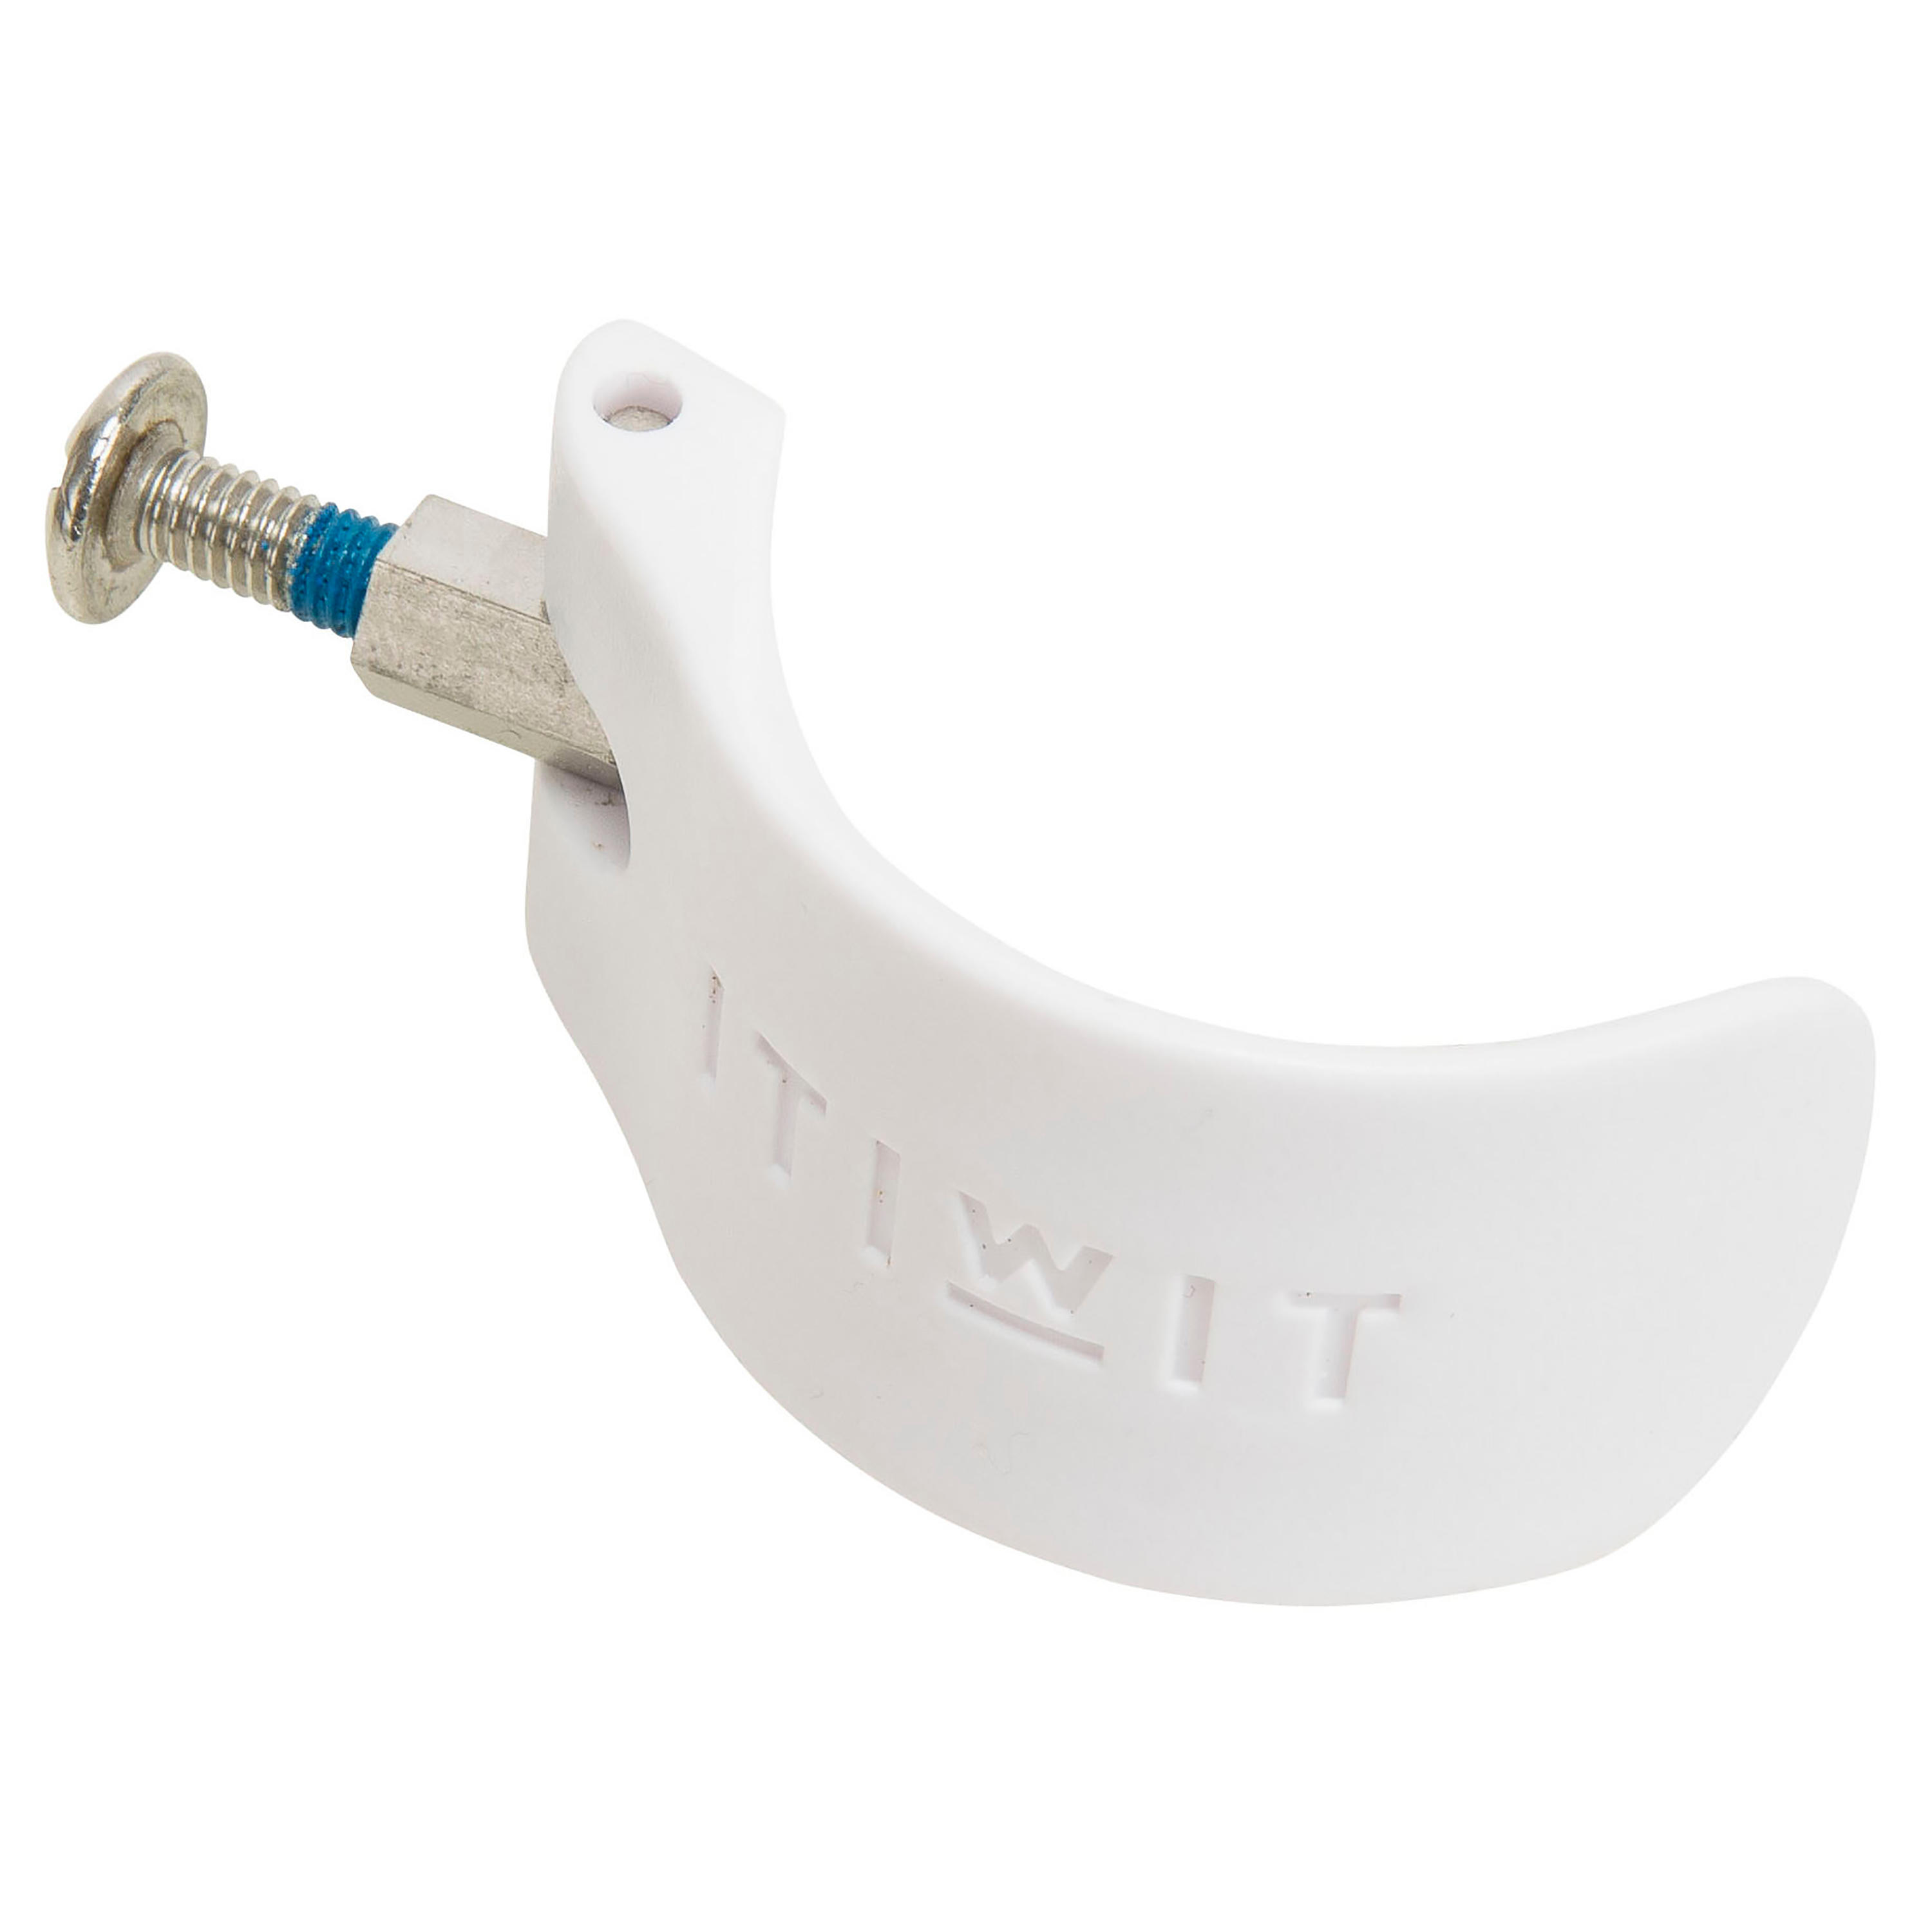 Kayak/Stand-up paddle locking system screw - ITIWIT